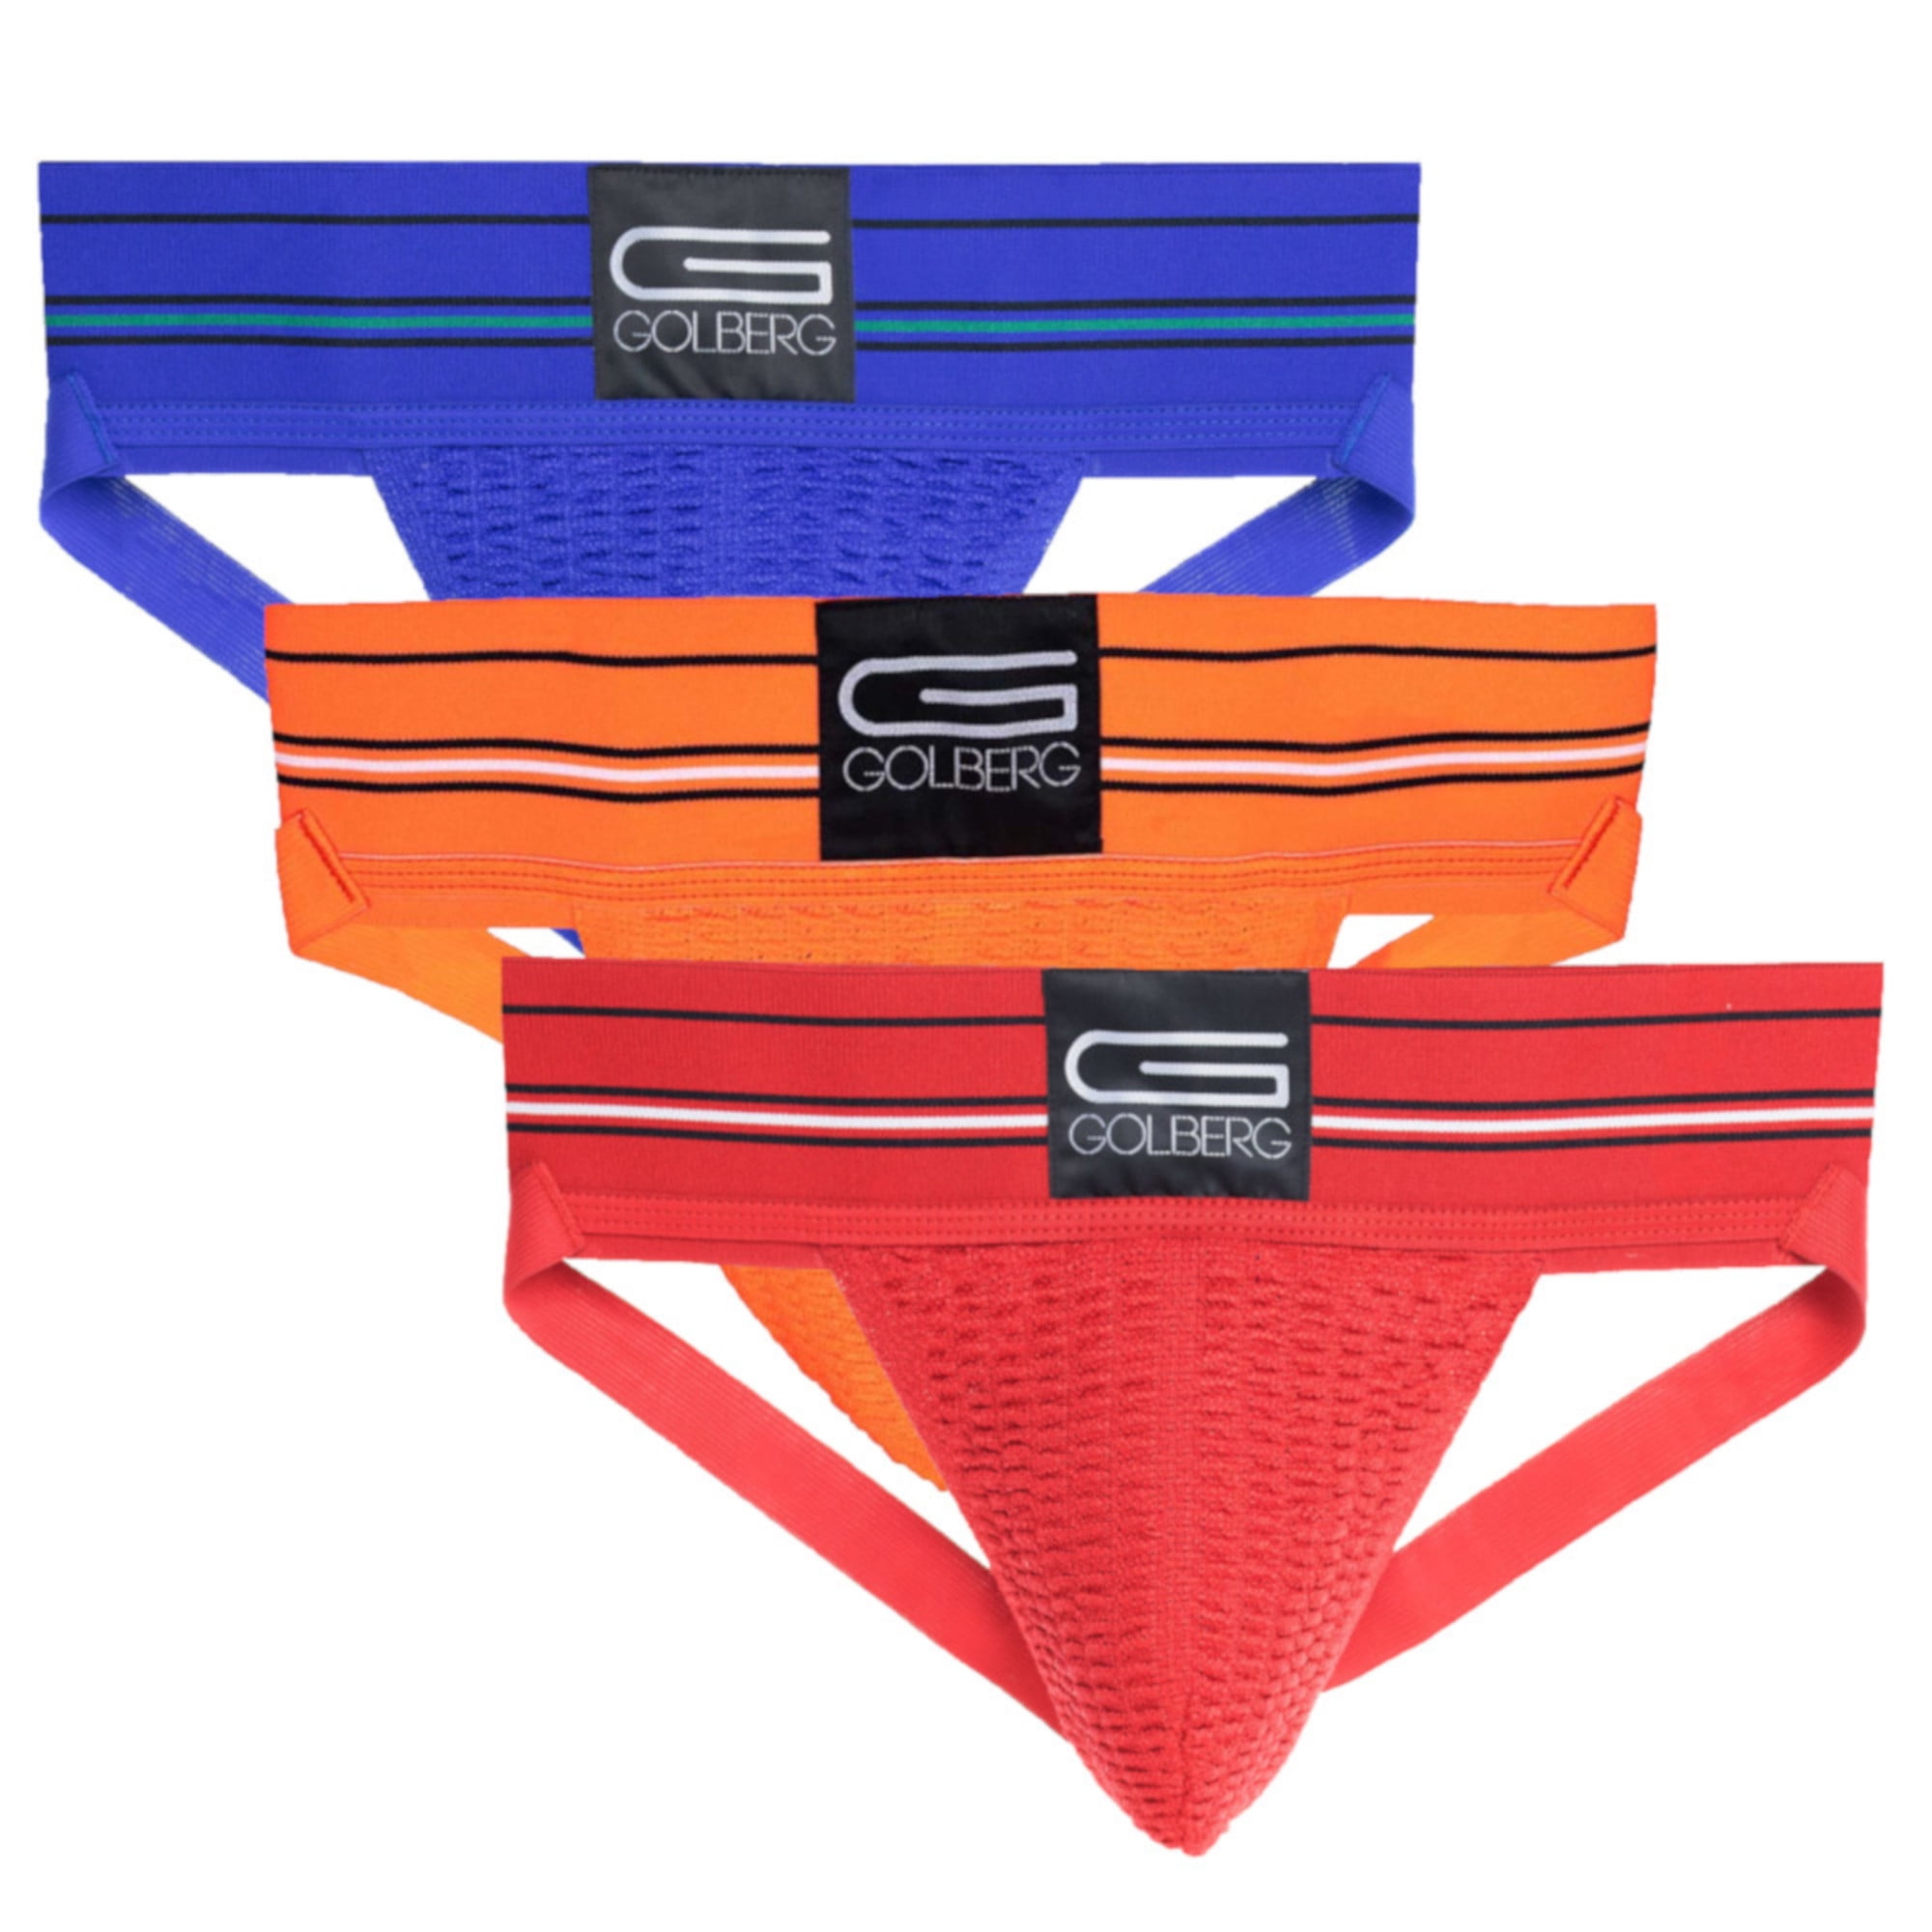 GOLBERG G Men’s Athletic Supporters 2 Pack Extra Strength Elastic - Jock Strap Underwear 